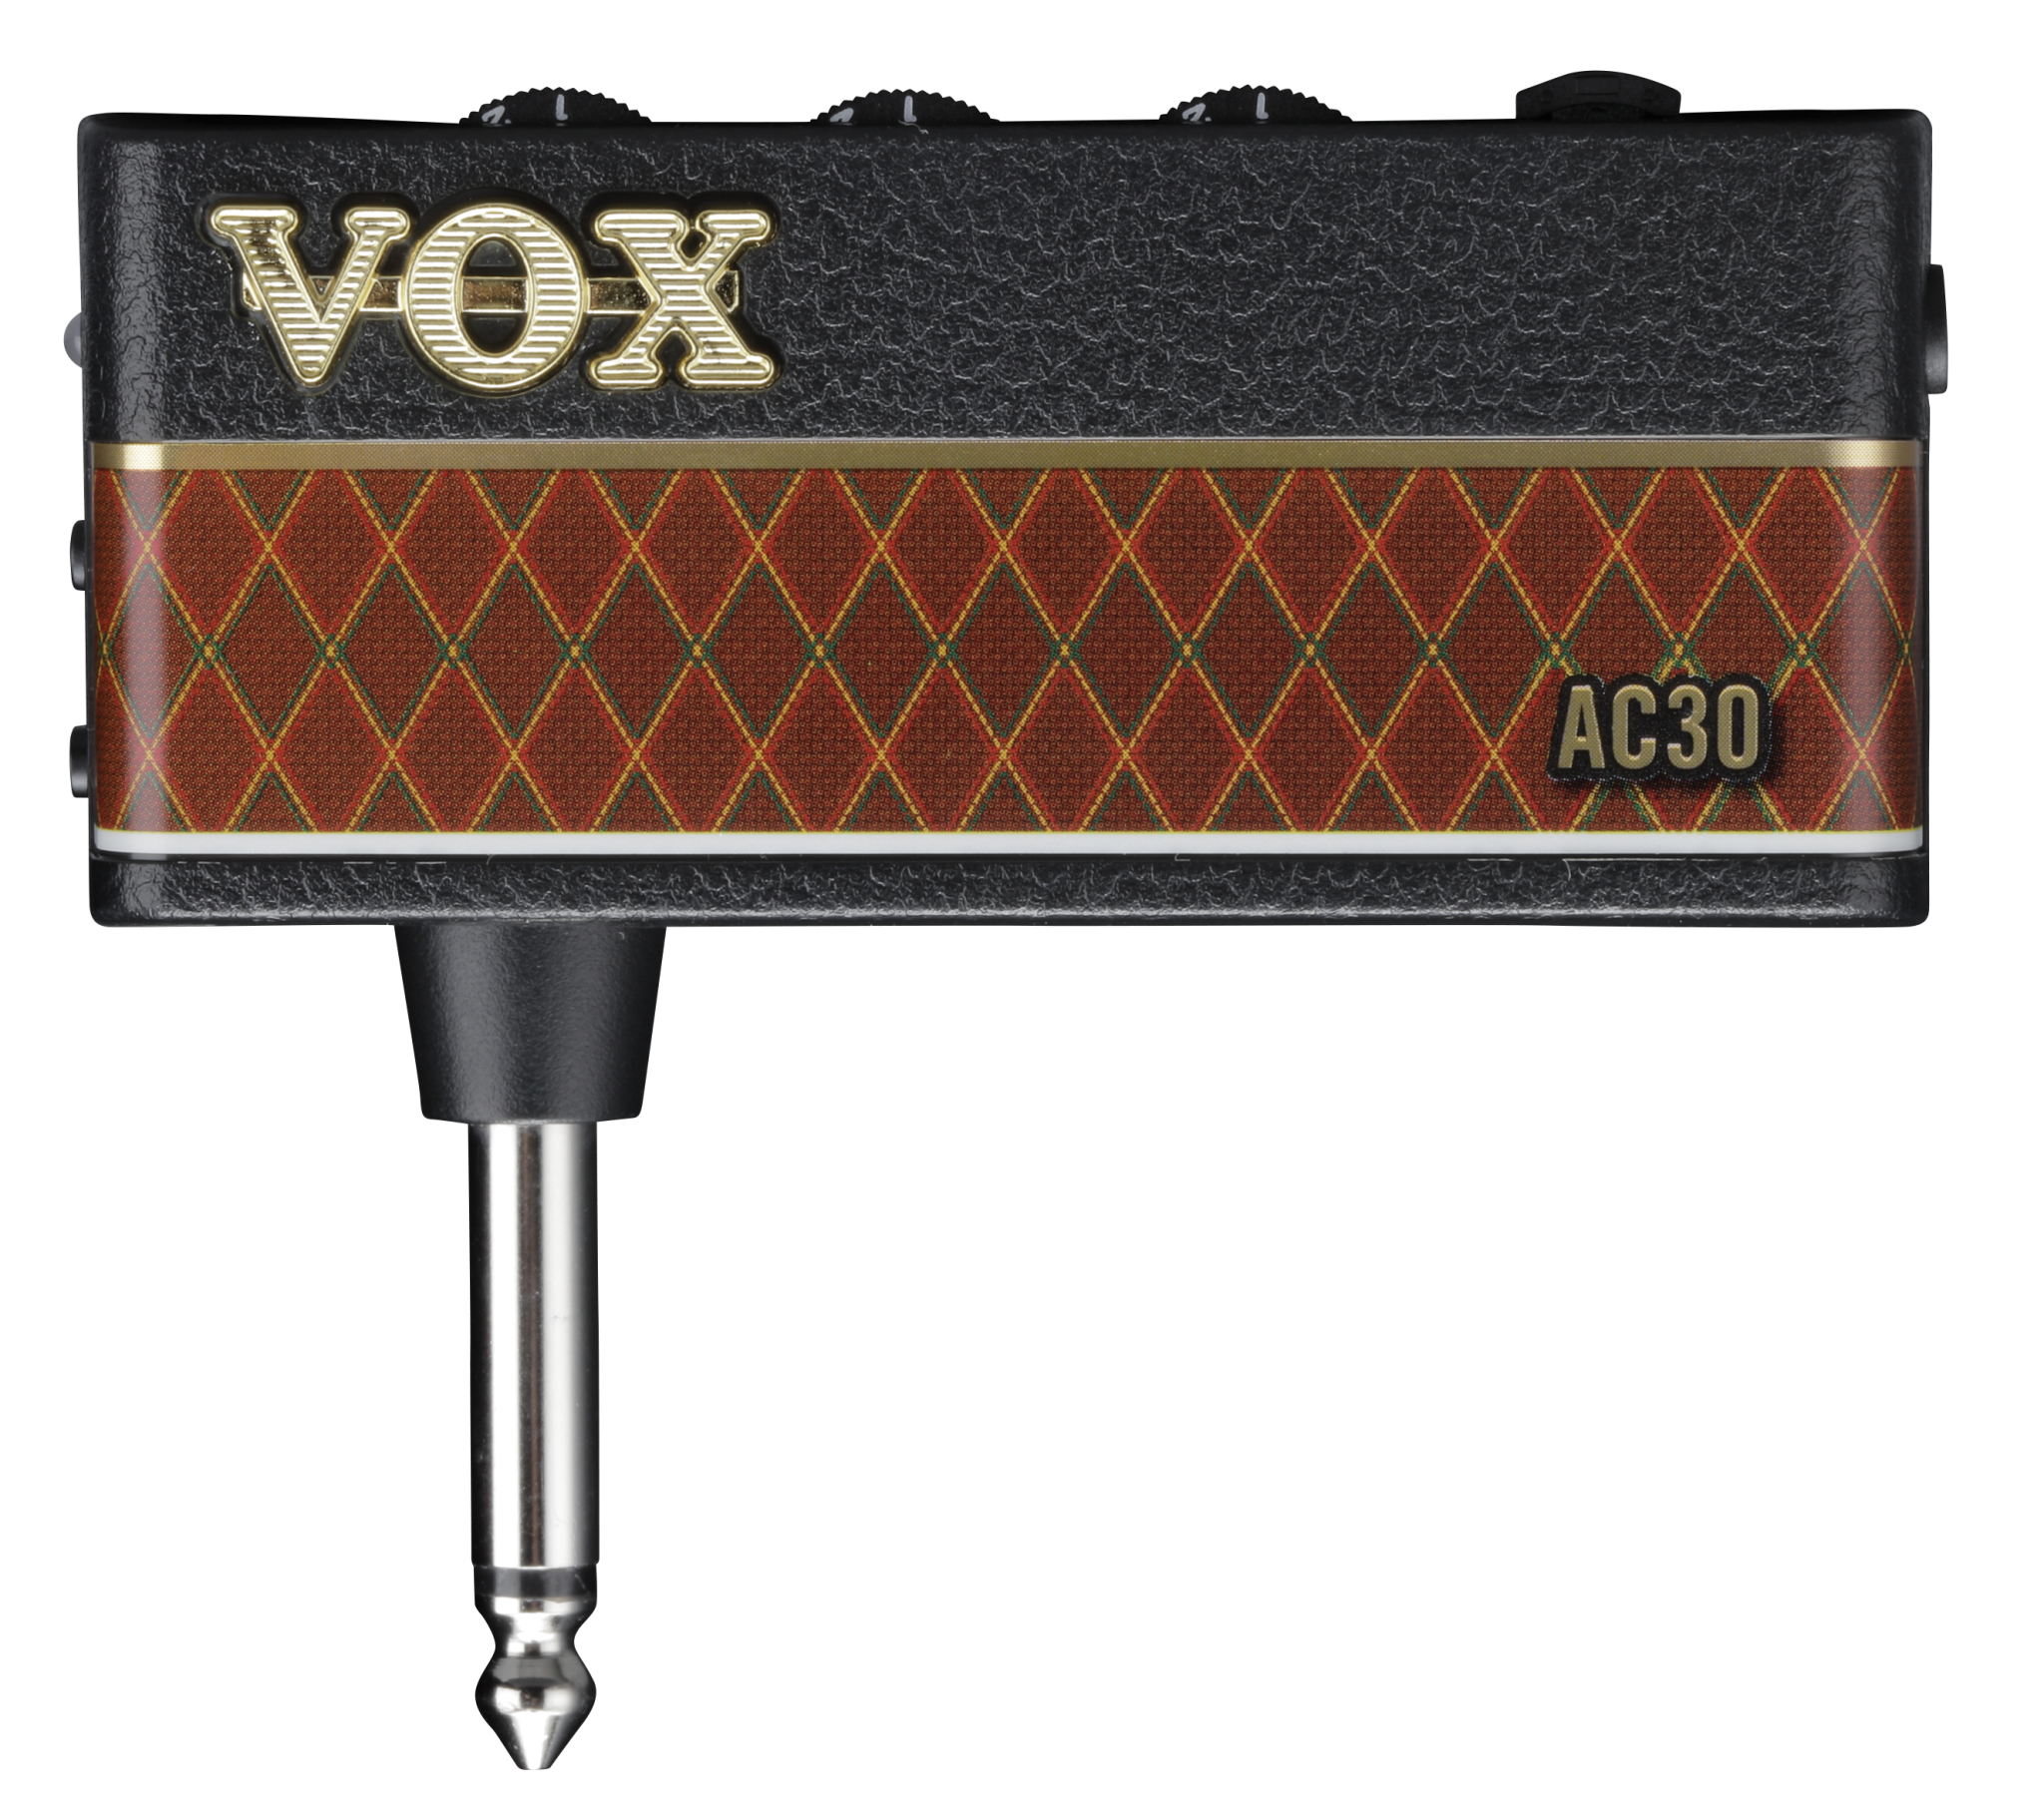 Vox Amplug 3 Headphone Amp - AC30